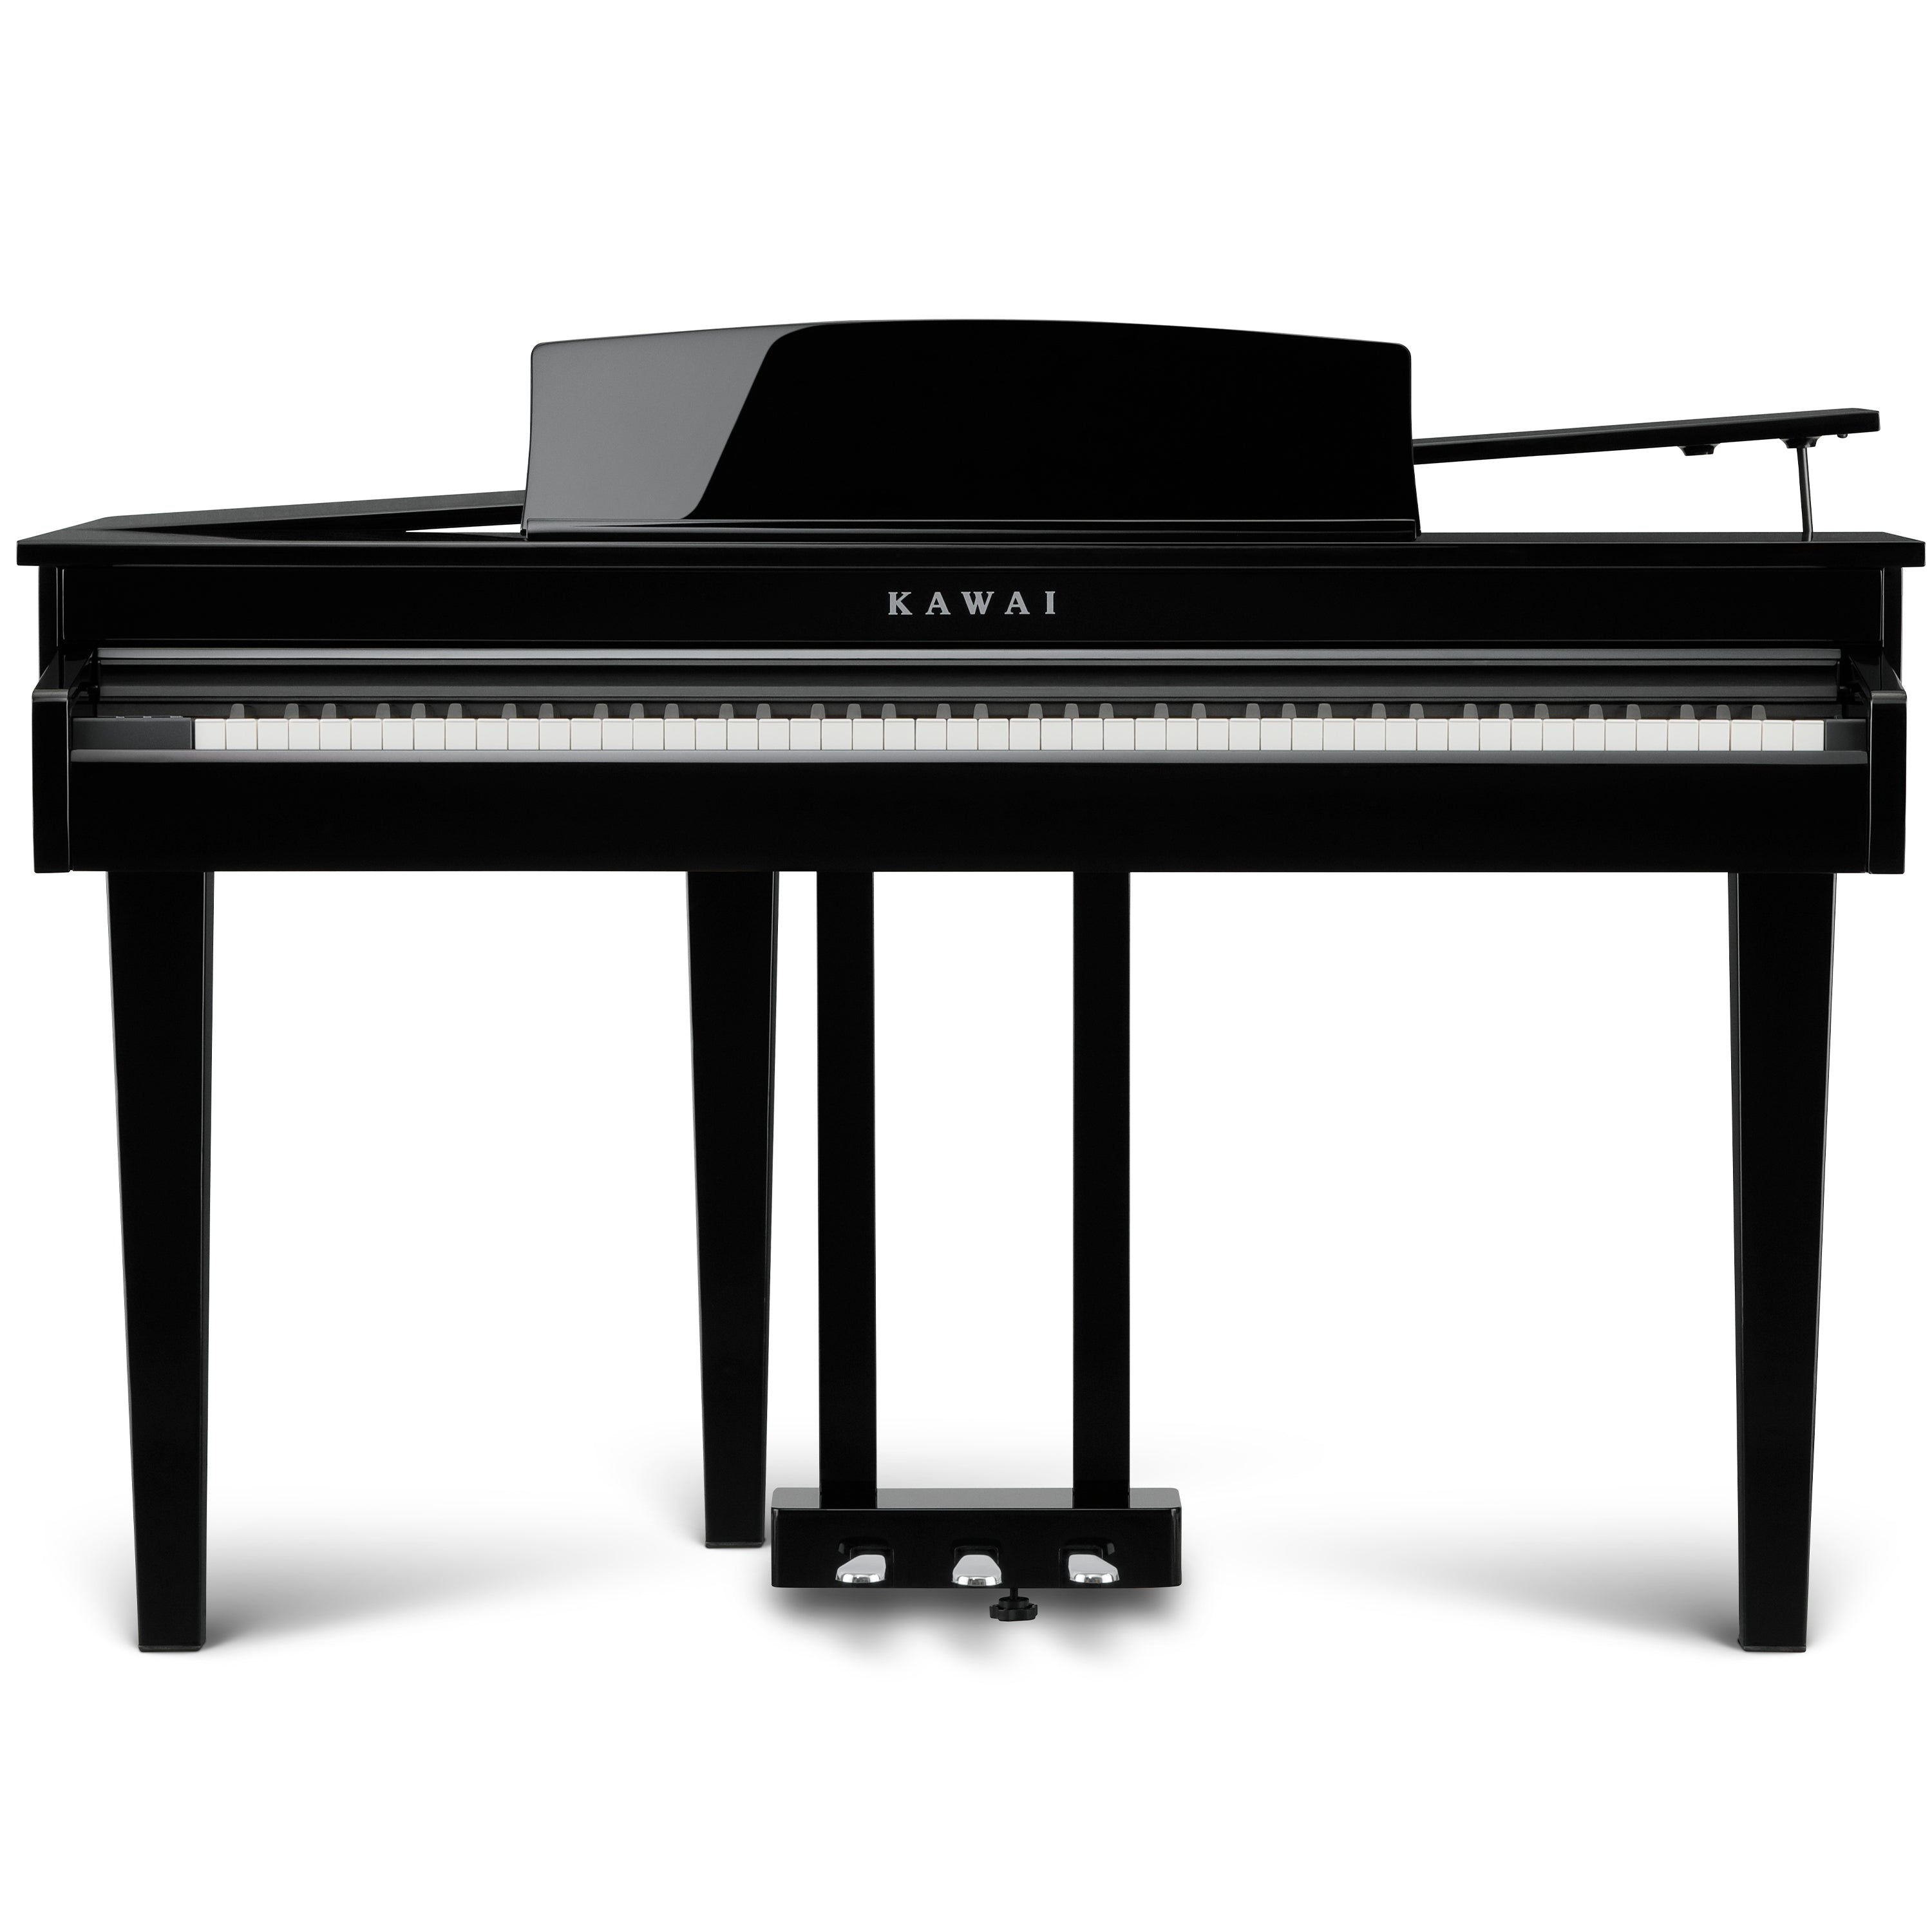 Kawai DG30 Digital Grand Piano - Ebony Polish - front view with lid open a little